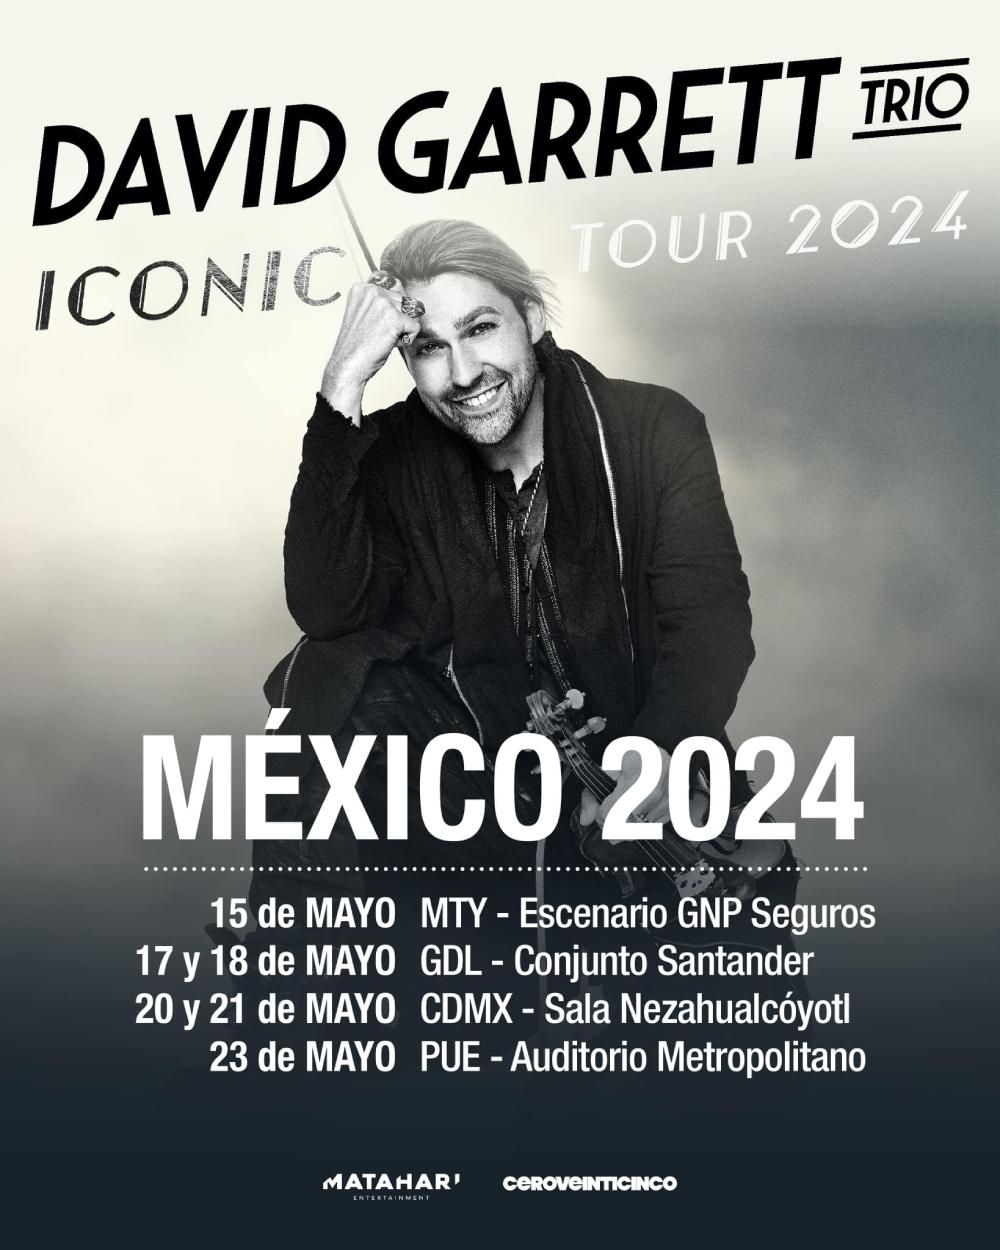 La gira por México estará muy completa.